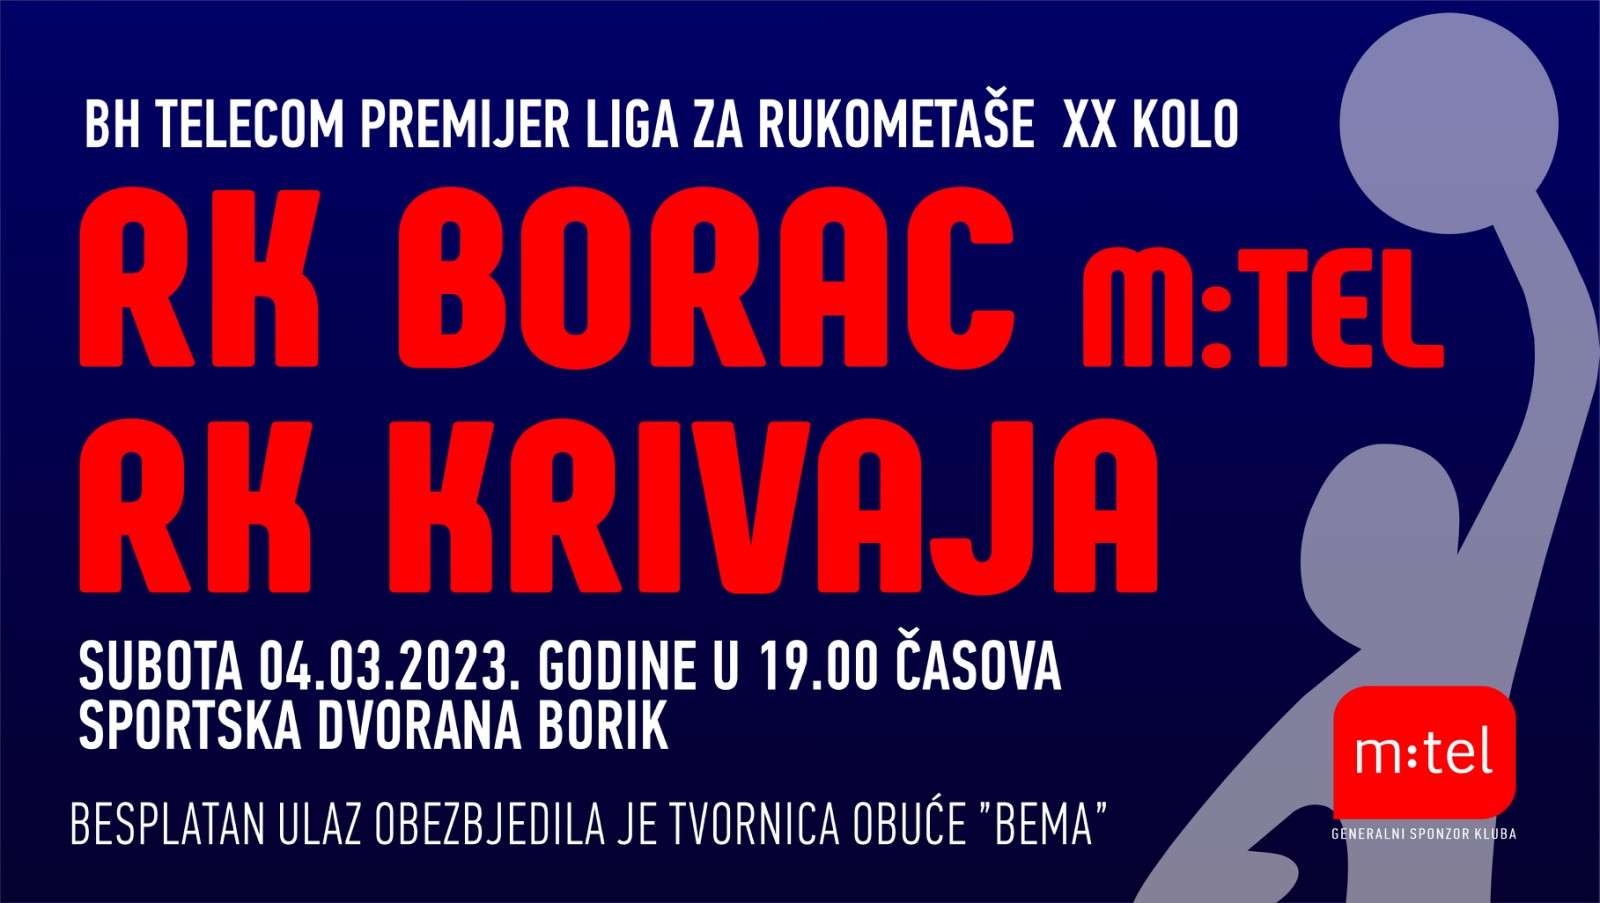 RK Borac vs RK Krivaja BH Telekom premijer liga 20.kolo sezona 2022/23